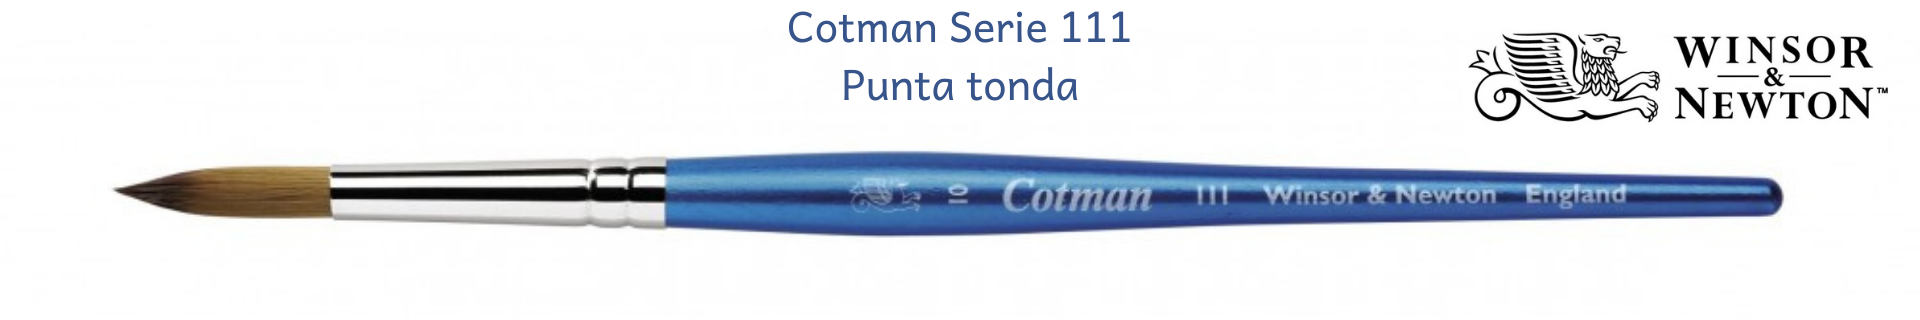 W&N Cotman 111